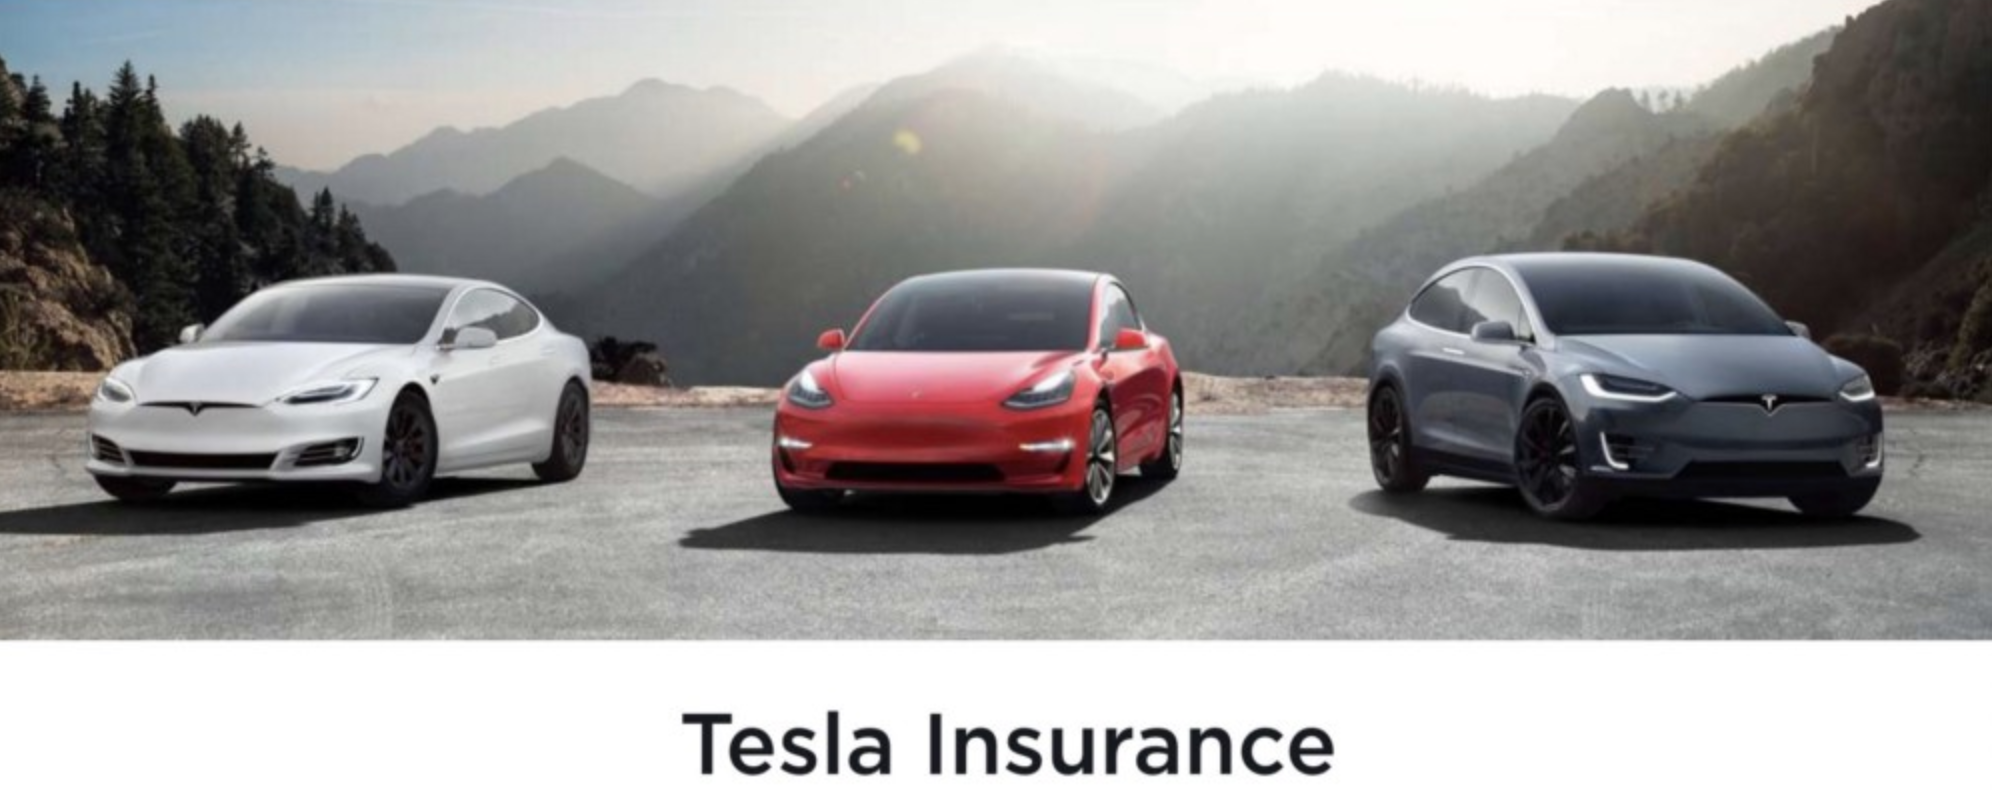 Tesla insurance